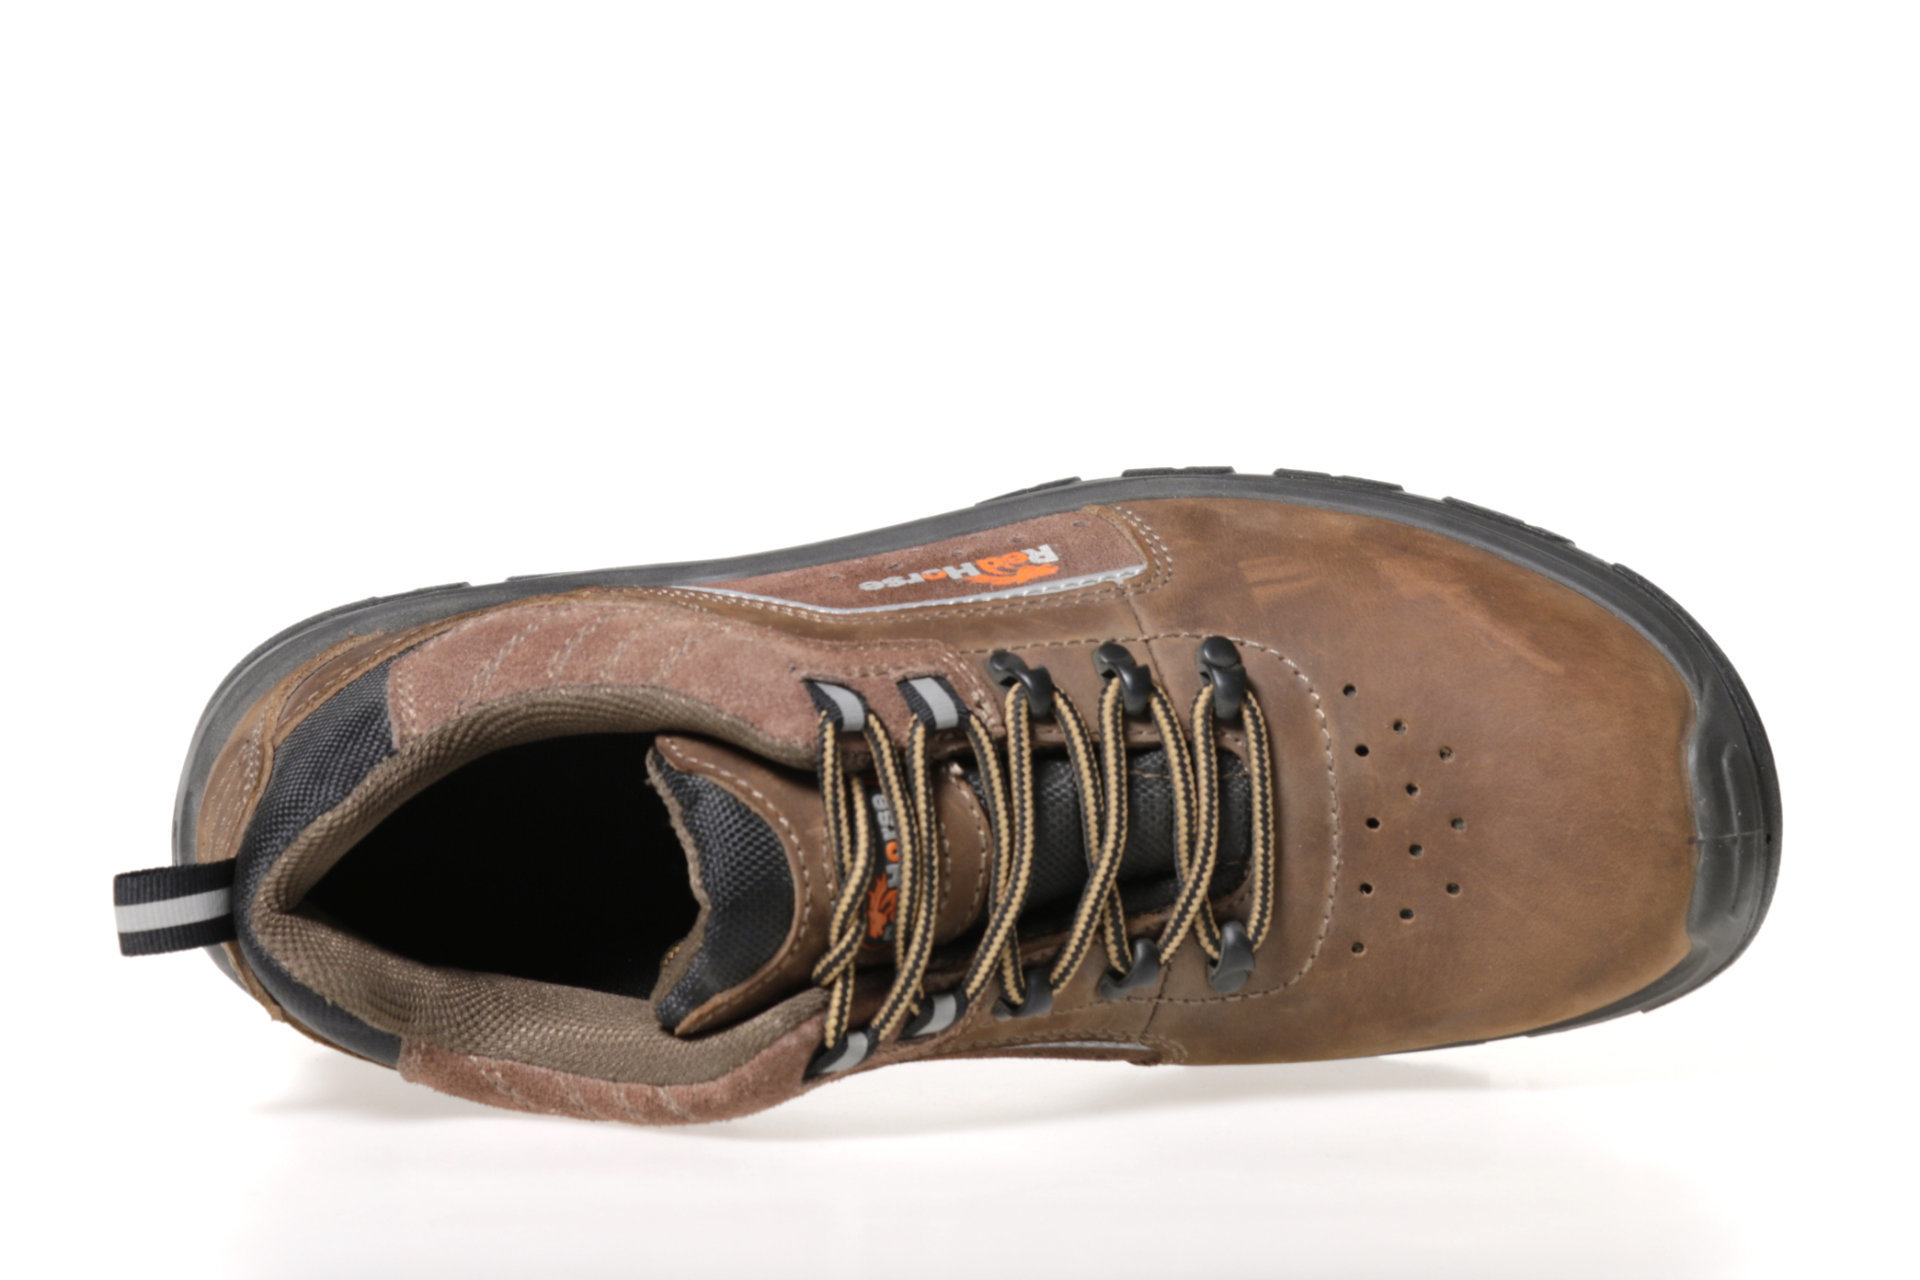 Men's waterproof alloy Toe Work Boots